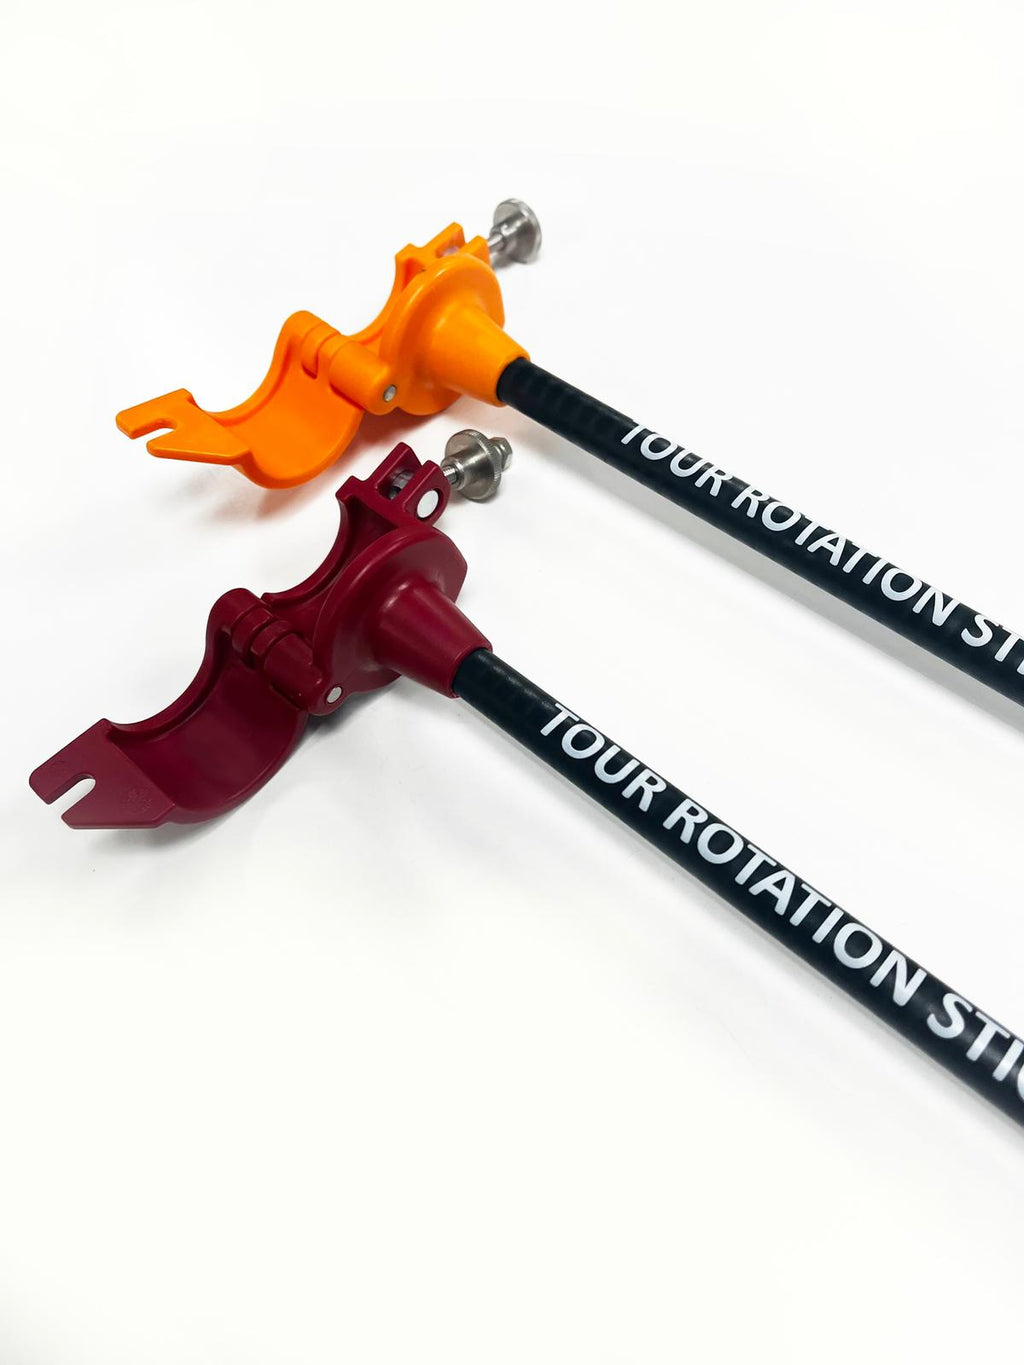 Tour Rotation Stick V2 - Red & Orange Models In Stock Now